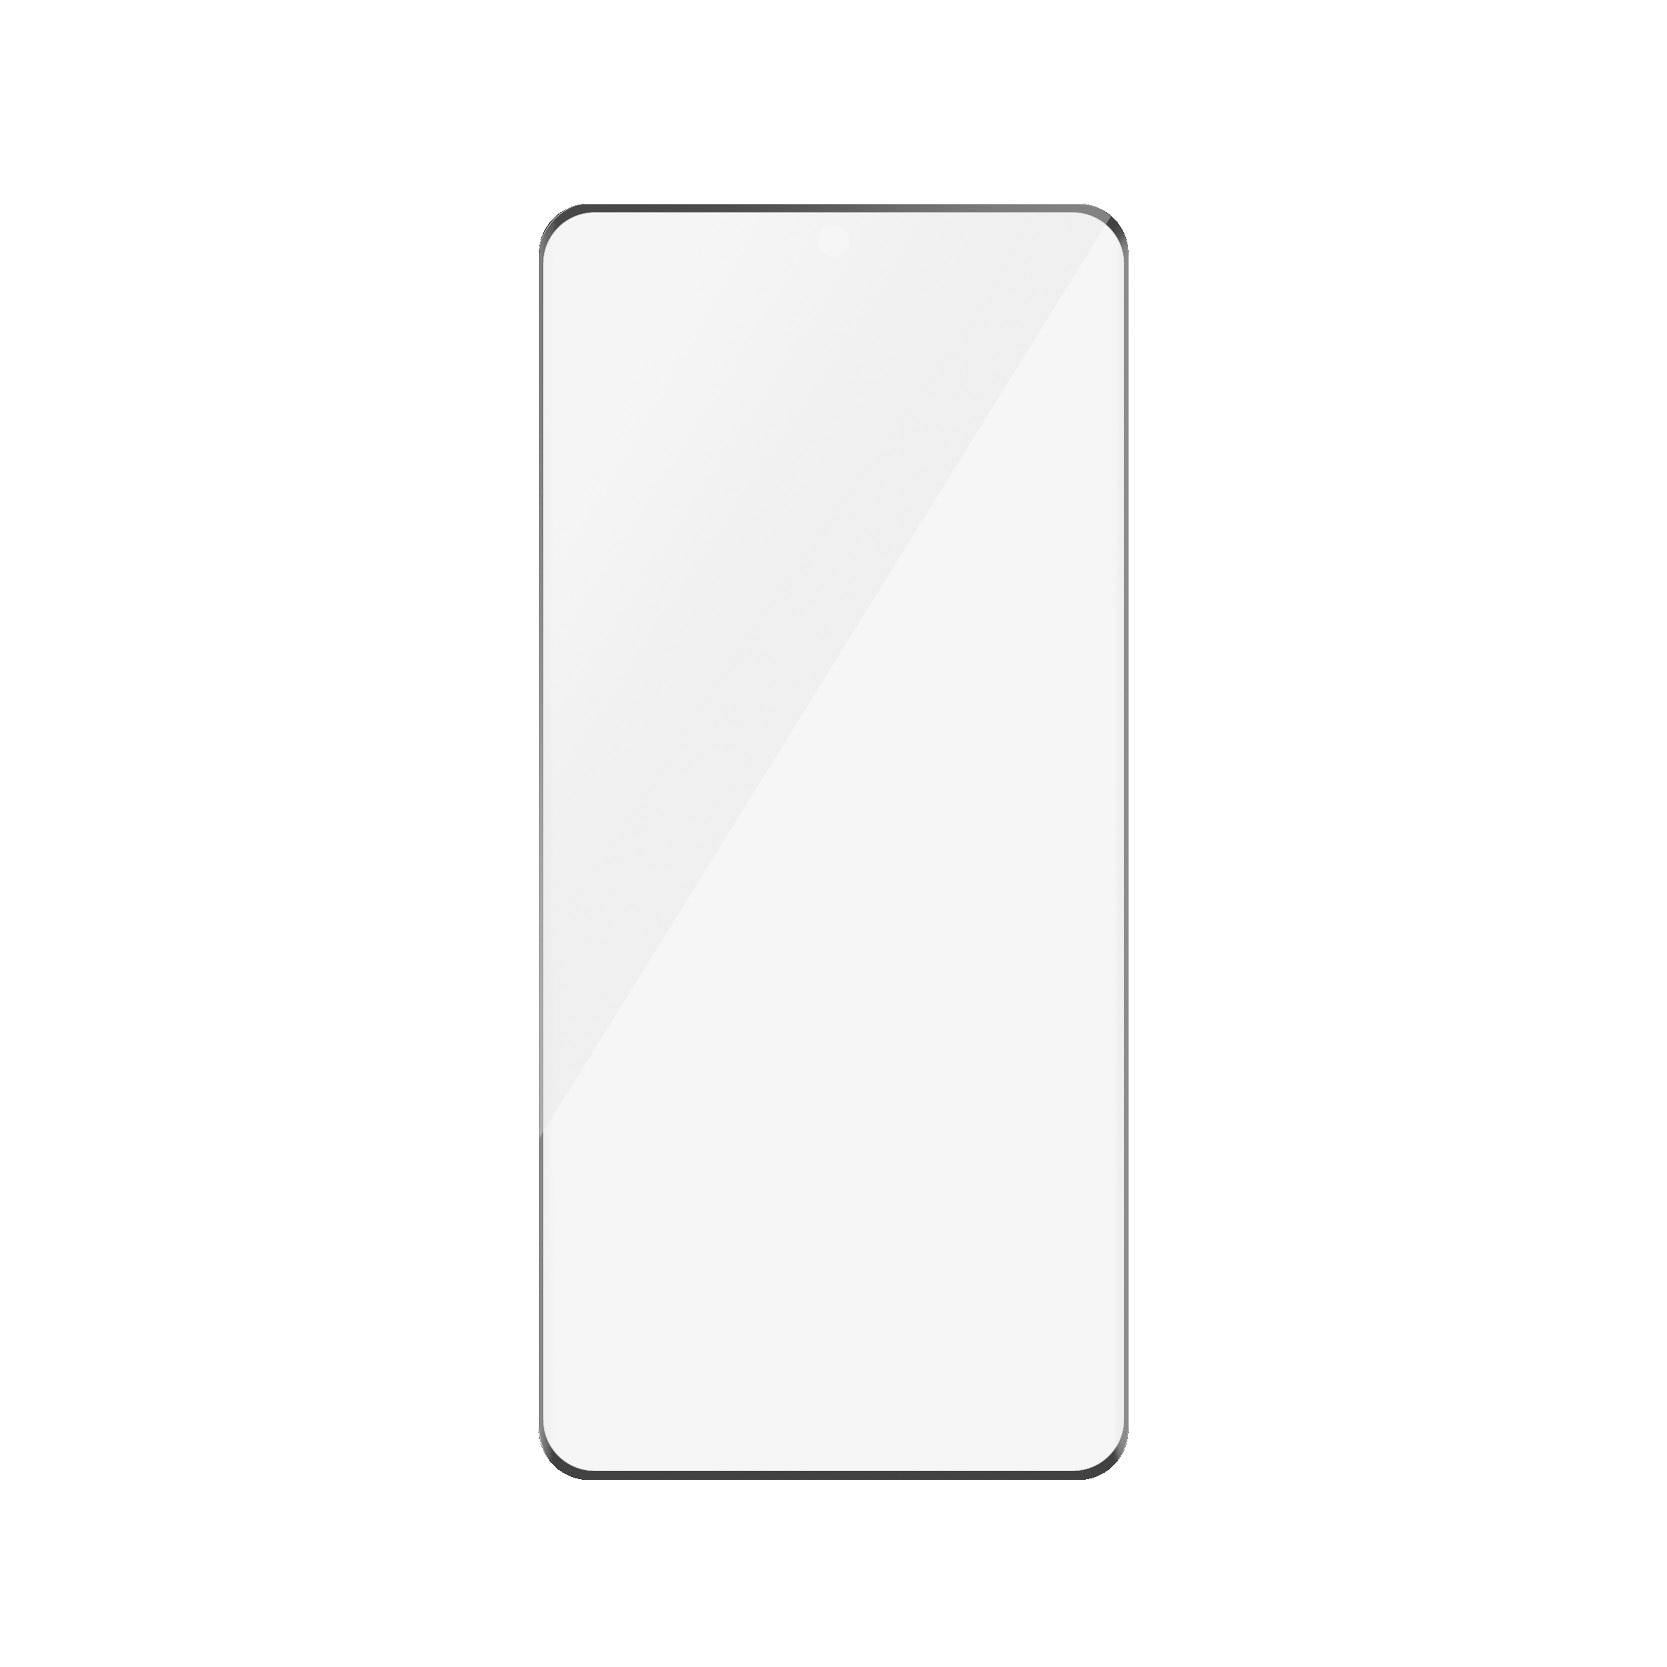 OnePlus 12 Skärmskydd i reptåligt härdat glas - Ultra Wide Fit